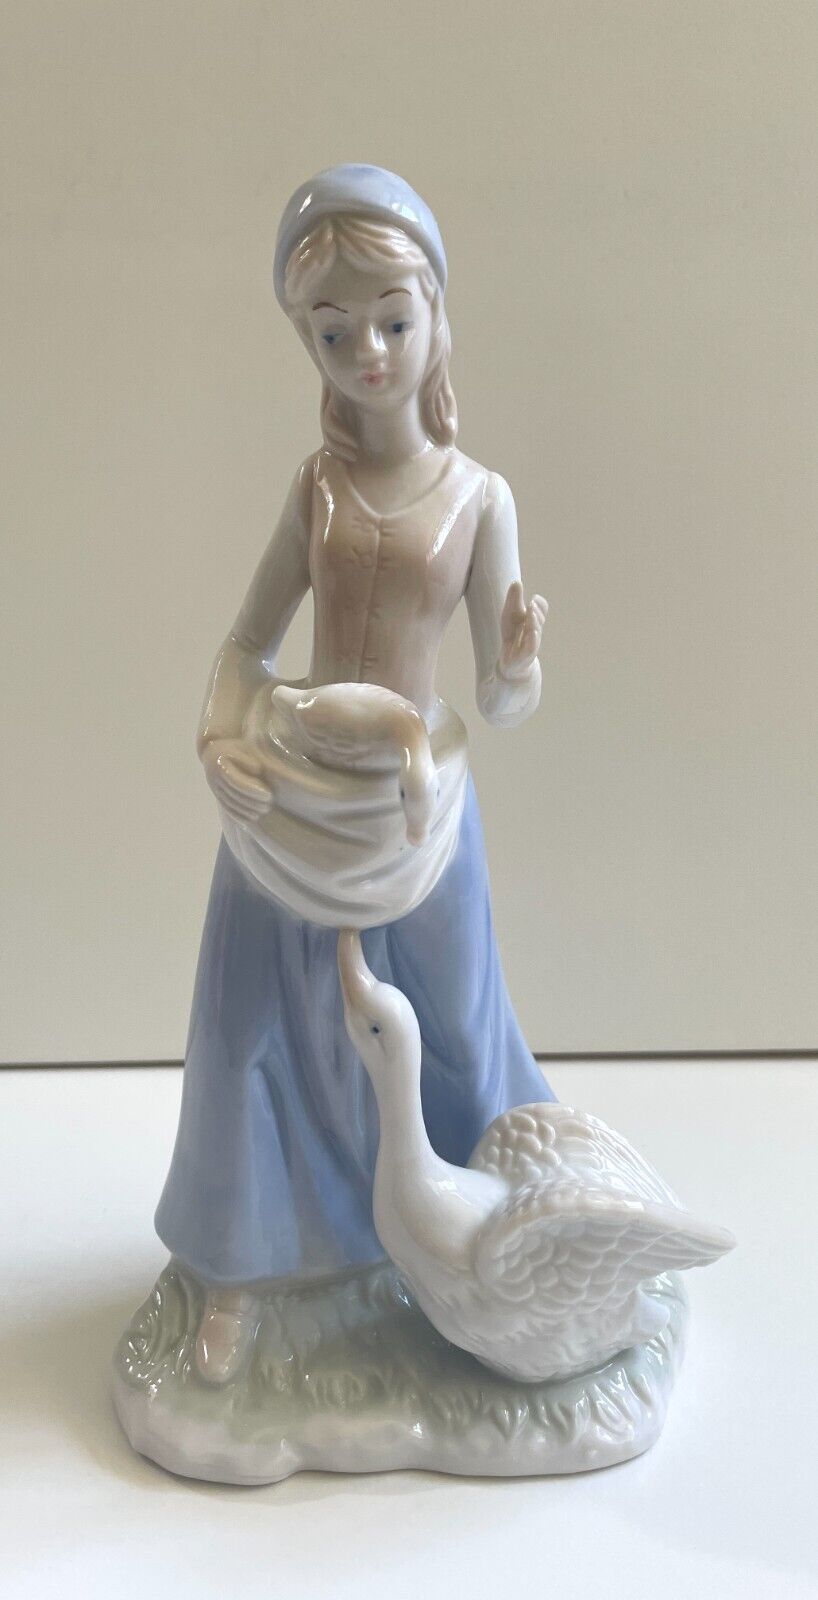 Vintage Lady Figurine Woman With 2 Ducks Ceramic White Blue 8